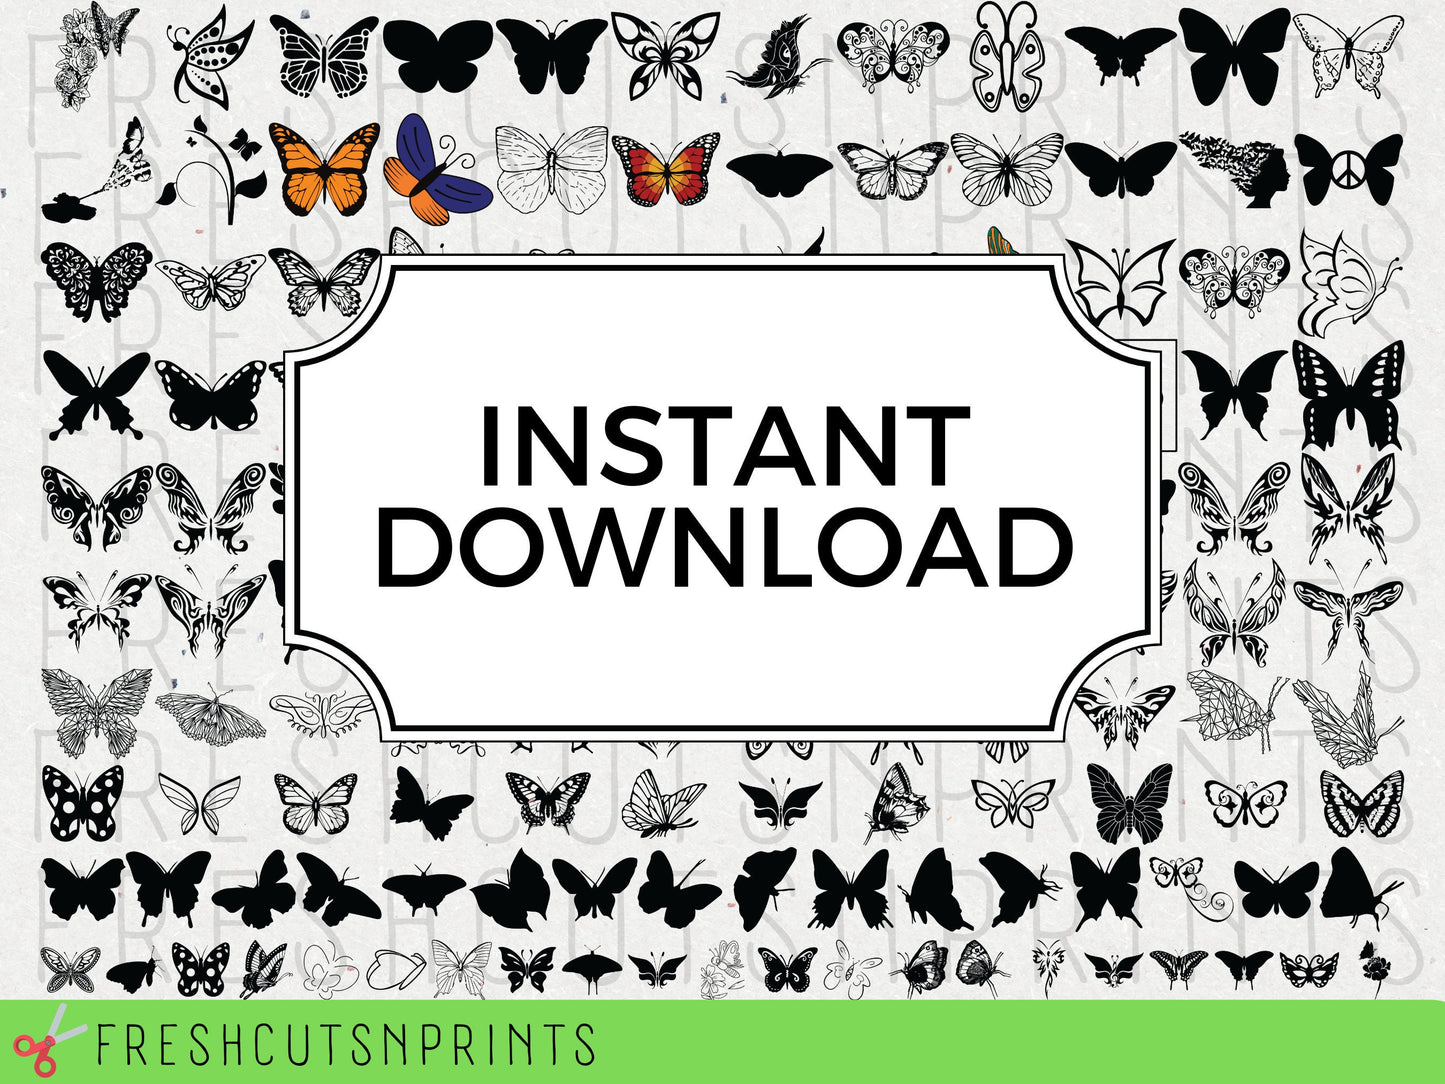 130+ Butterfly SVG Bundle, Butterfly Silhouette, Layered Butterfly, Butterfly Clipart, Butterfly Lover, Butterfly Cricut, Tribal Butterfly